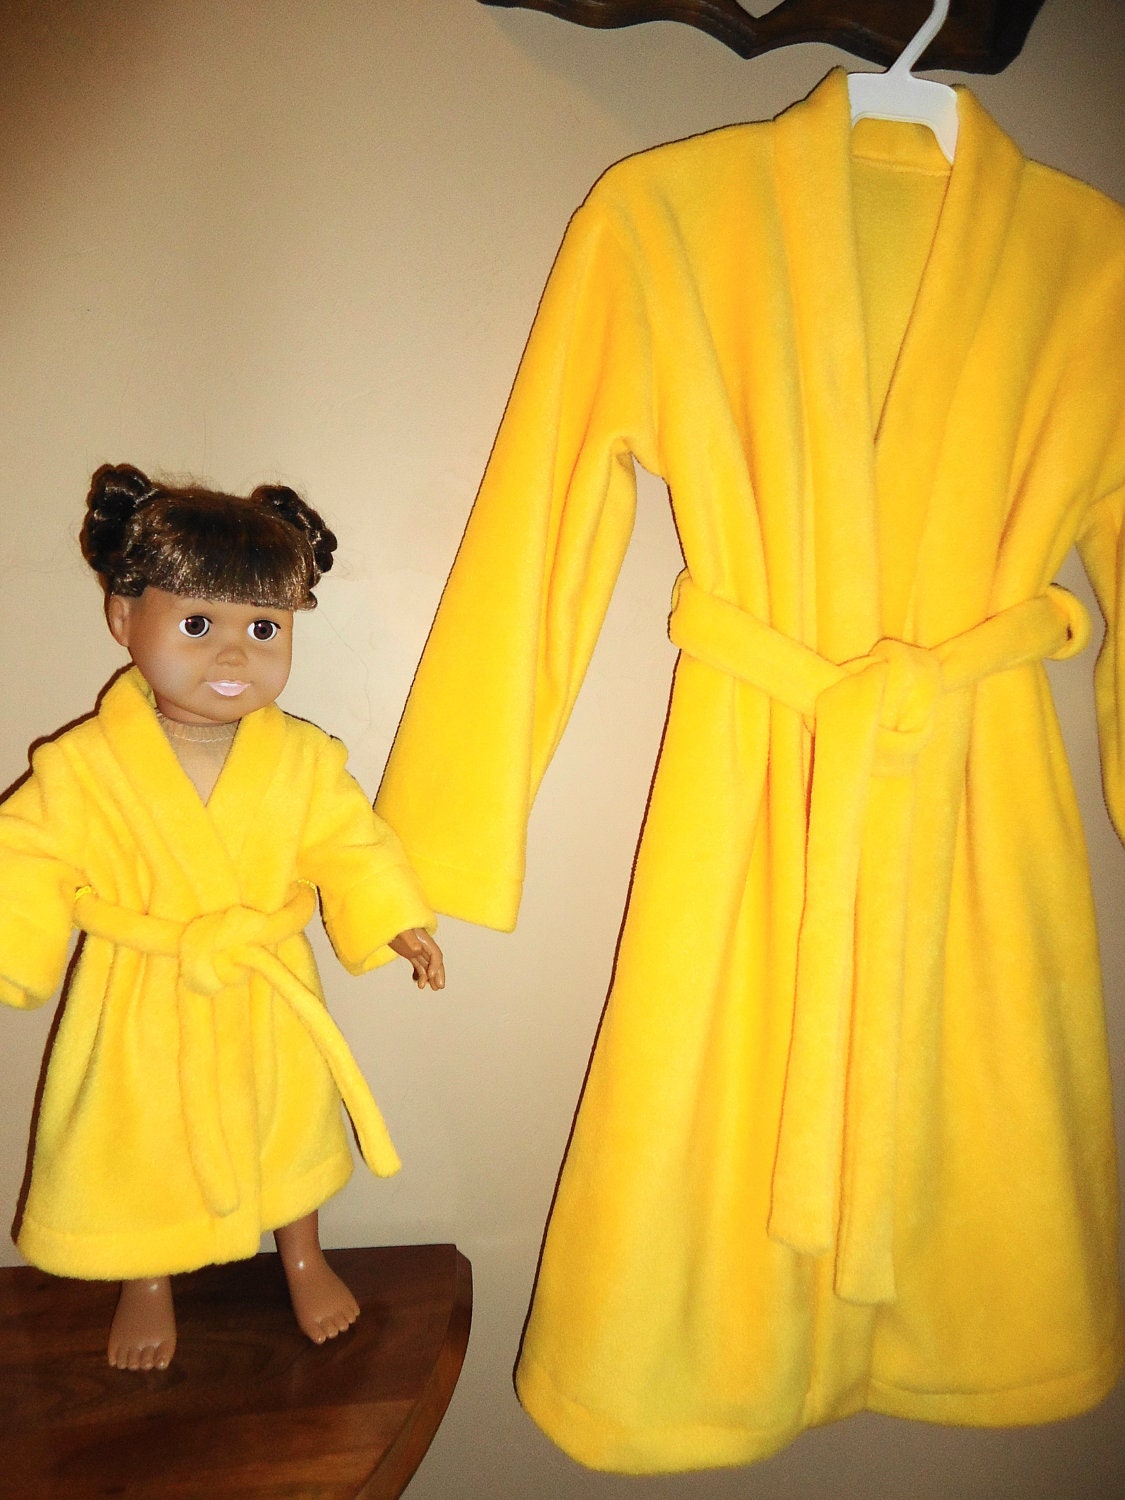 Yellow fleece bathrobes for girl size 5 and matching robe for 18" doll - MarshaSueSews